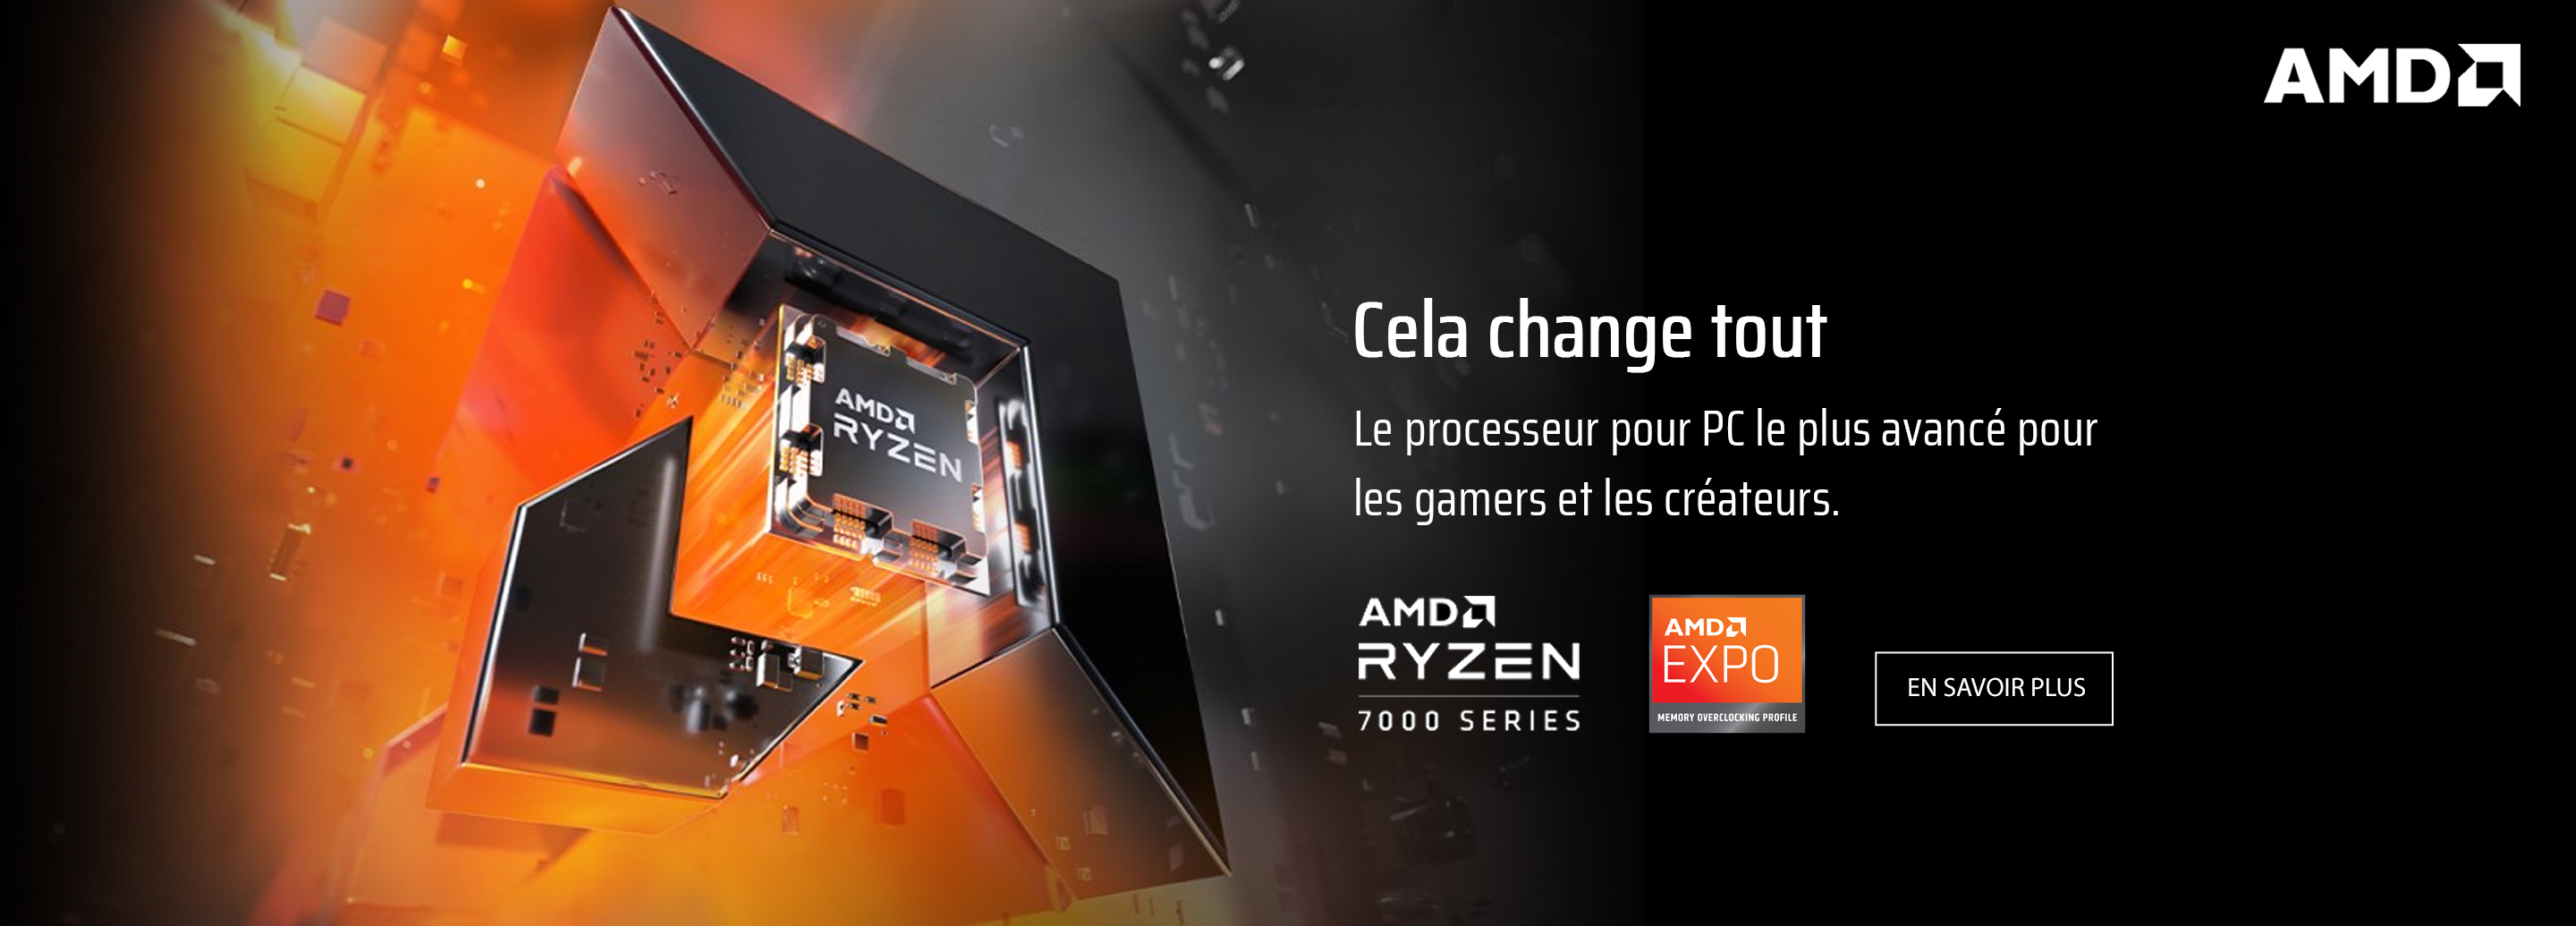 AMD CPU 7000 series